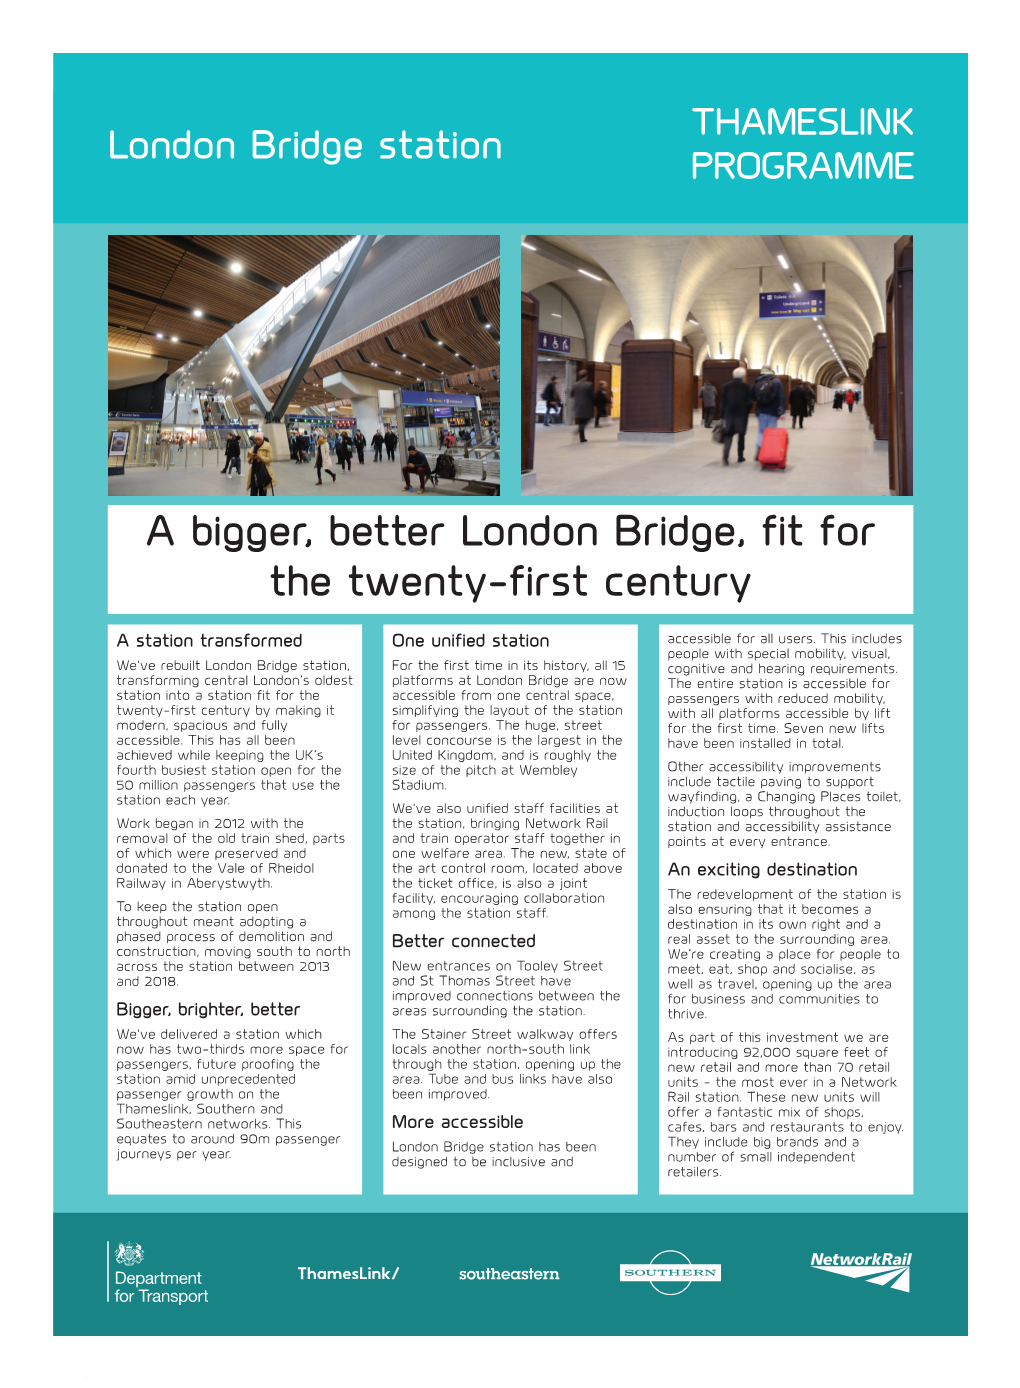 London Bridge Station Redevelopment Factsheet